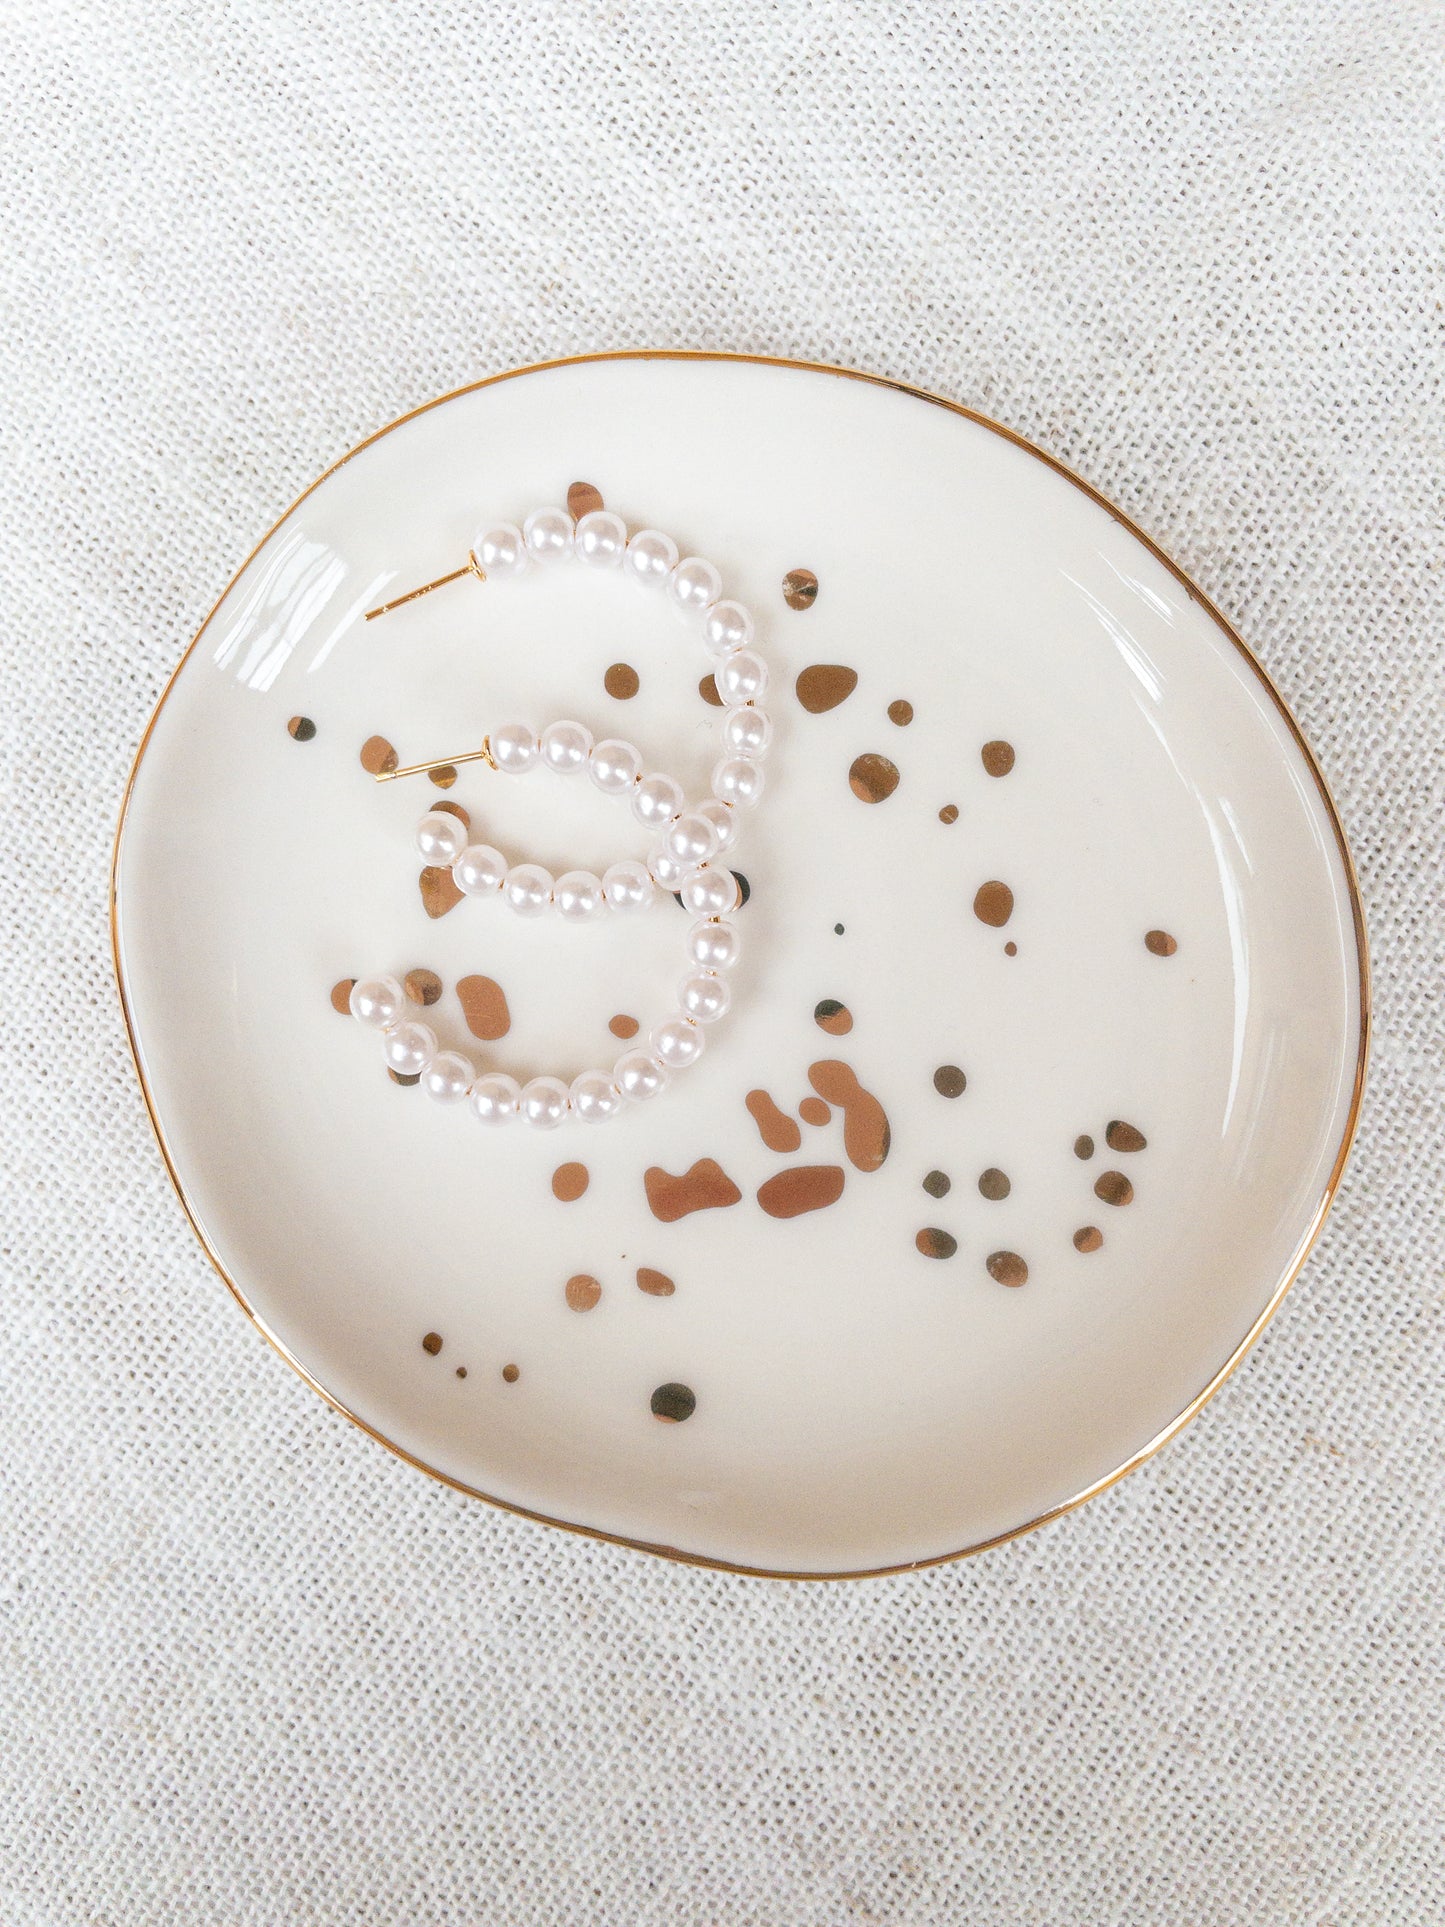 gold speckled jewelry dish | ceramic